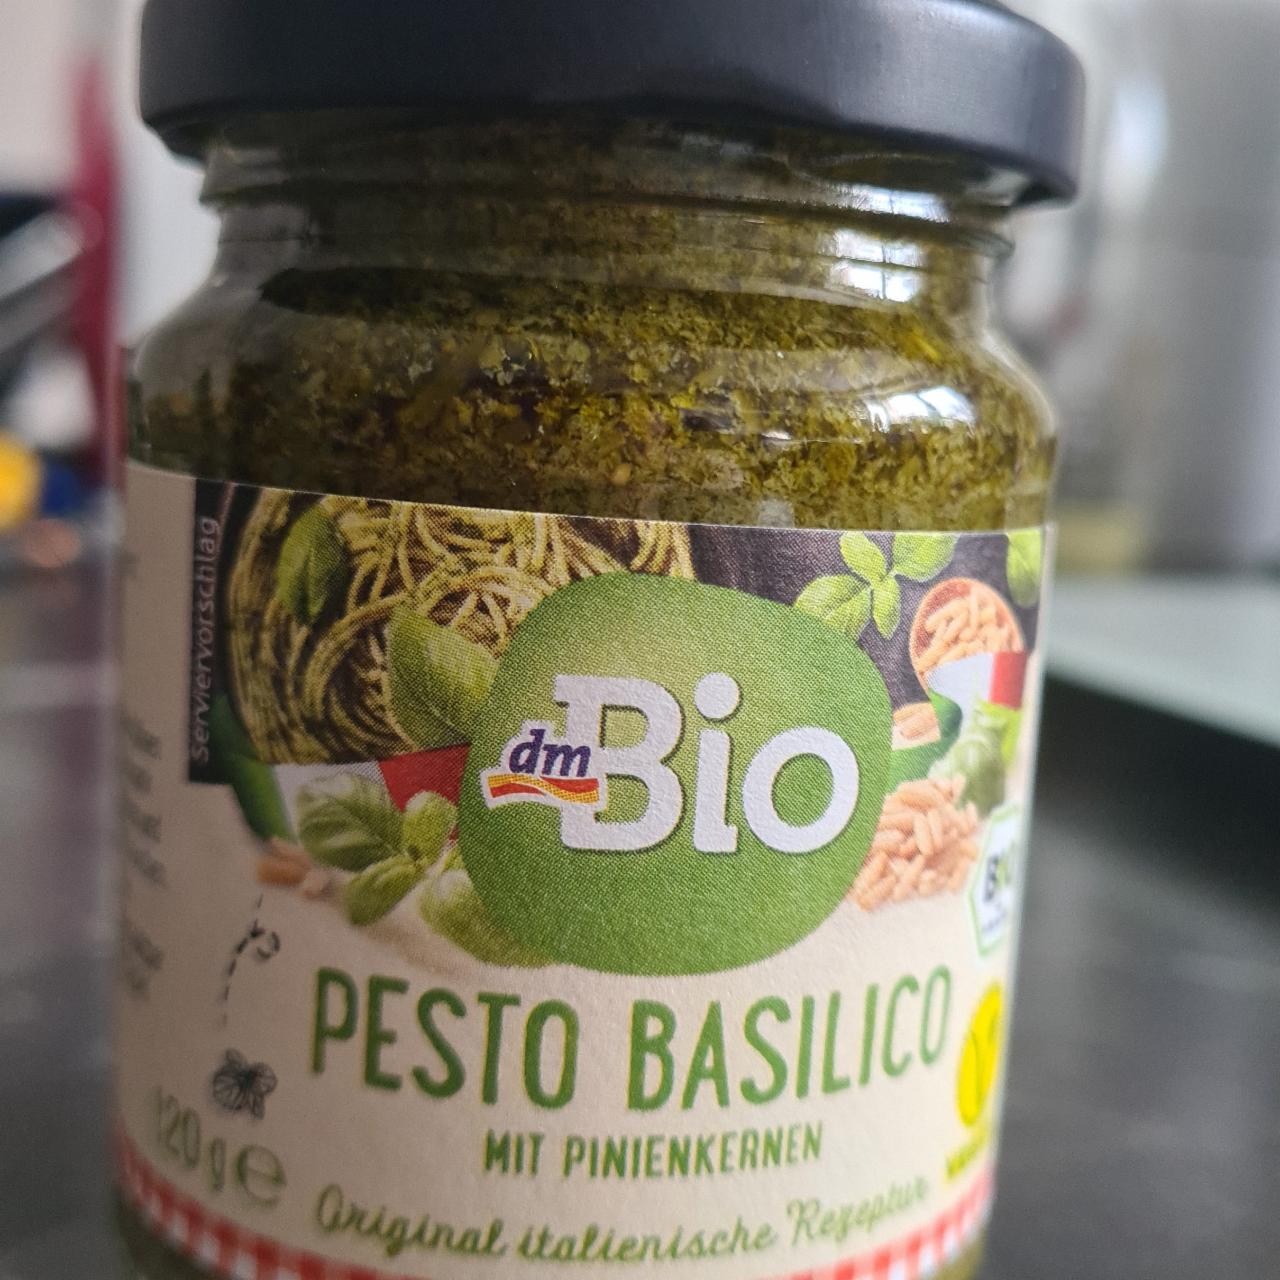 Képek - Pesto basilico dmBio